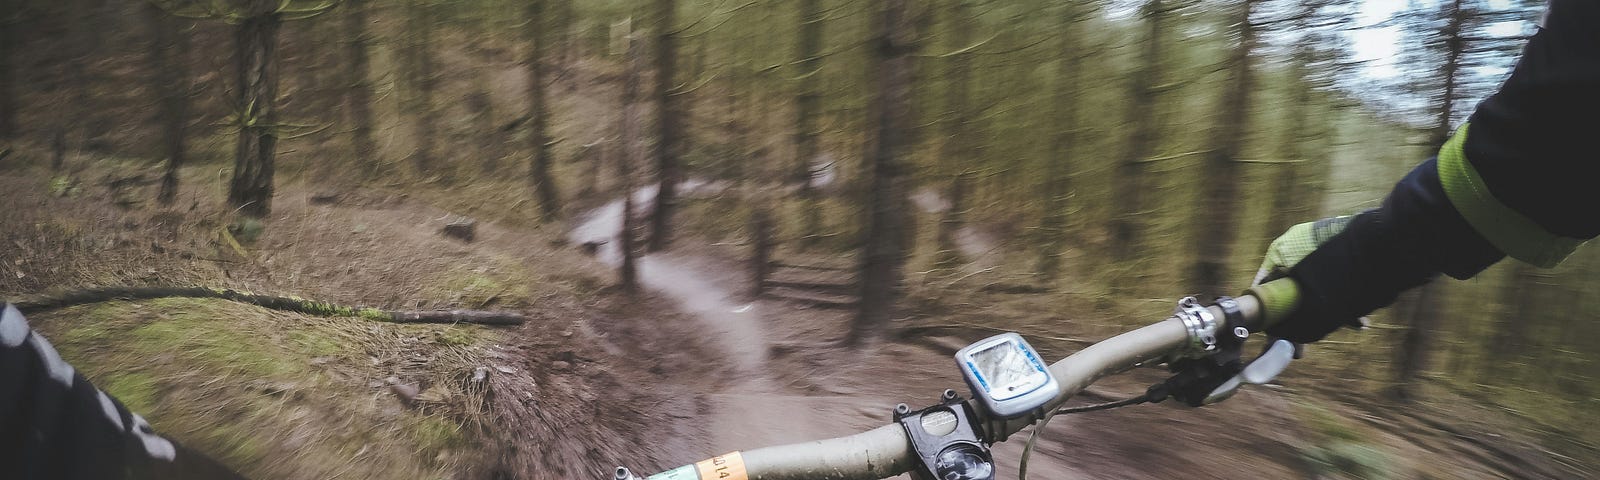 mountain bike on a narrow trail